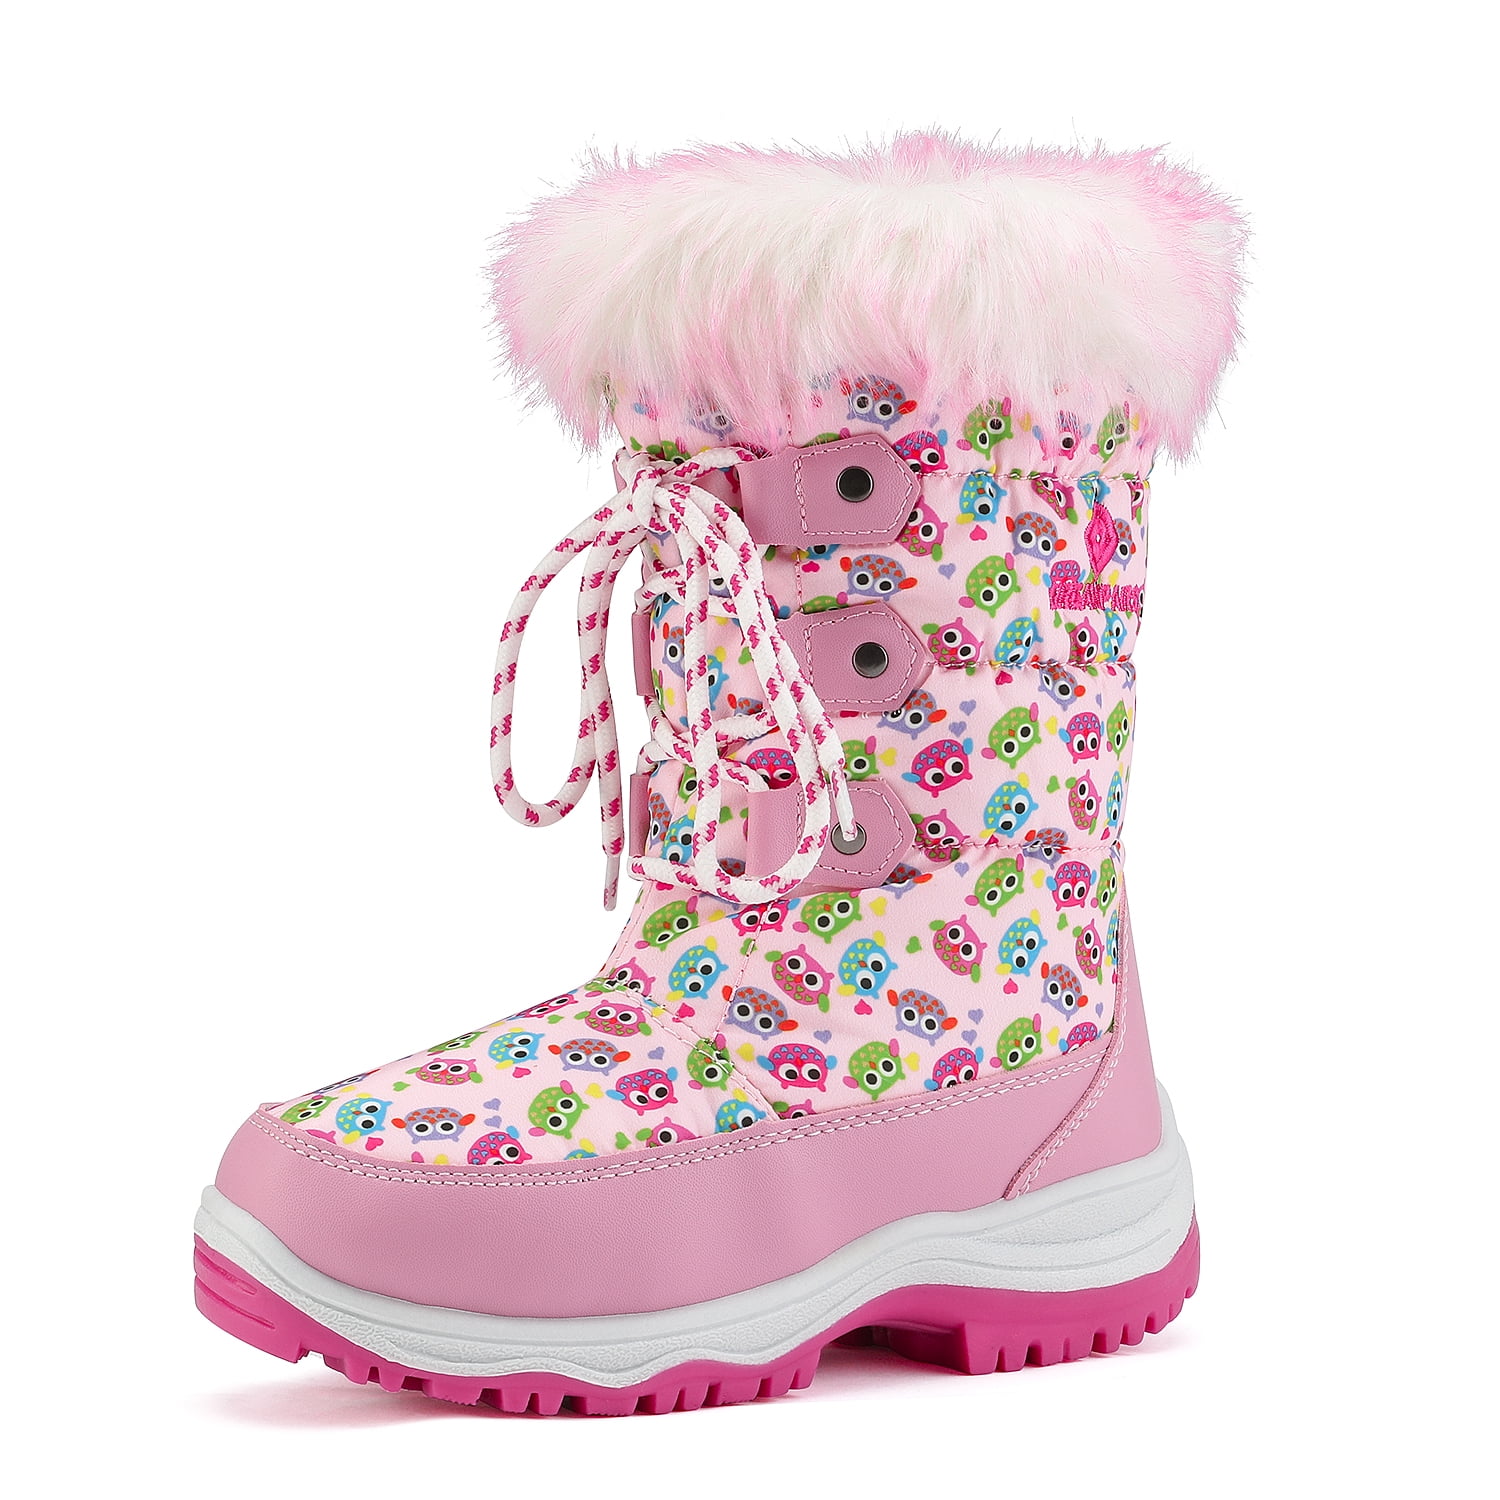 DREAM PAIRS Nordic Boys Girls Beige White Knee High Waterproof Winter Snow Boots Size 13 M US Little Kid